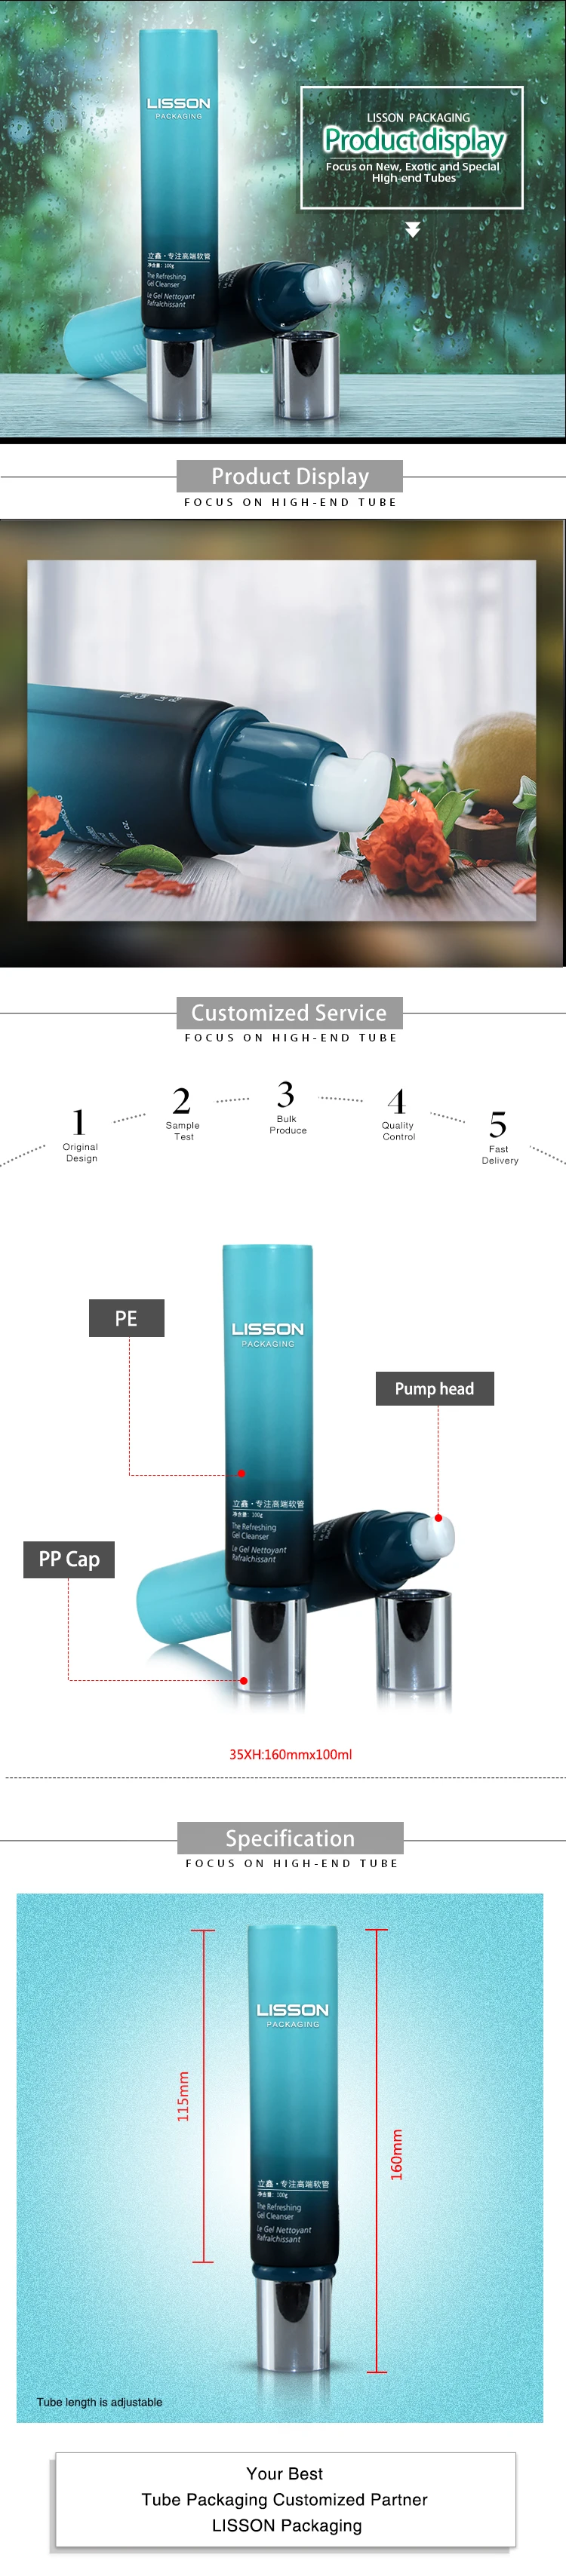 100ml empty custom cosmetic BB cream airless pump head tube packaging